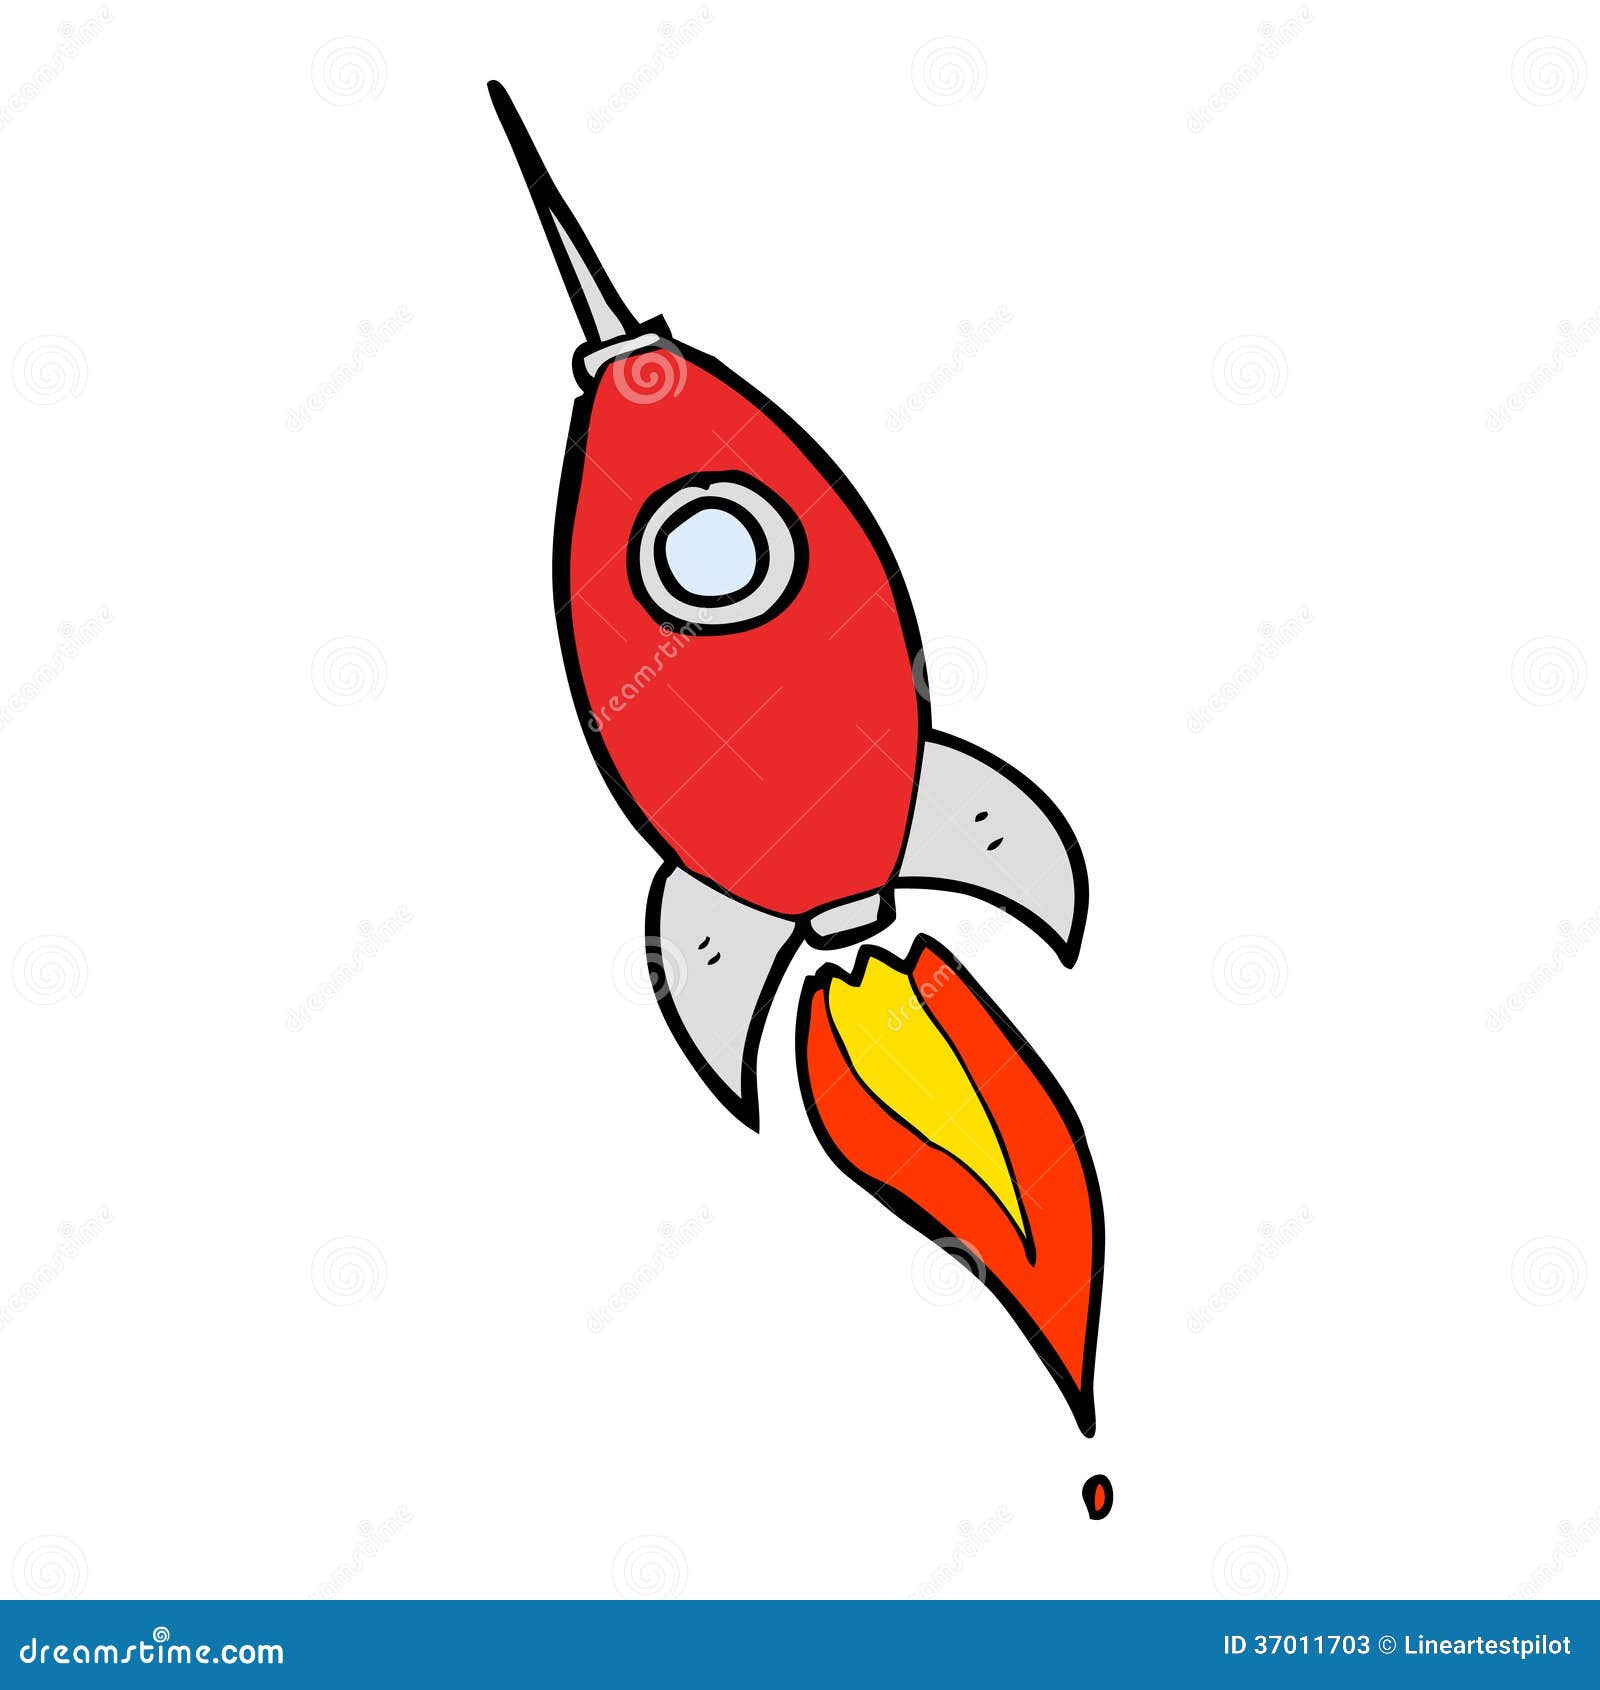 Cartoon space rocket stock vector. Illustration of drawing - 37011703